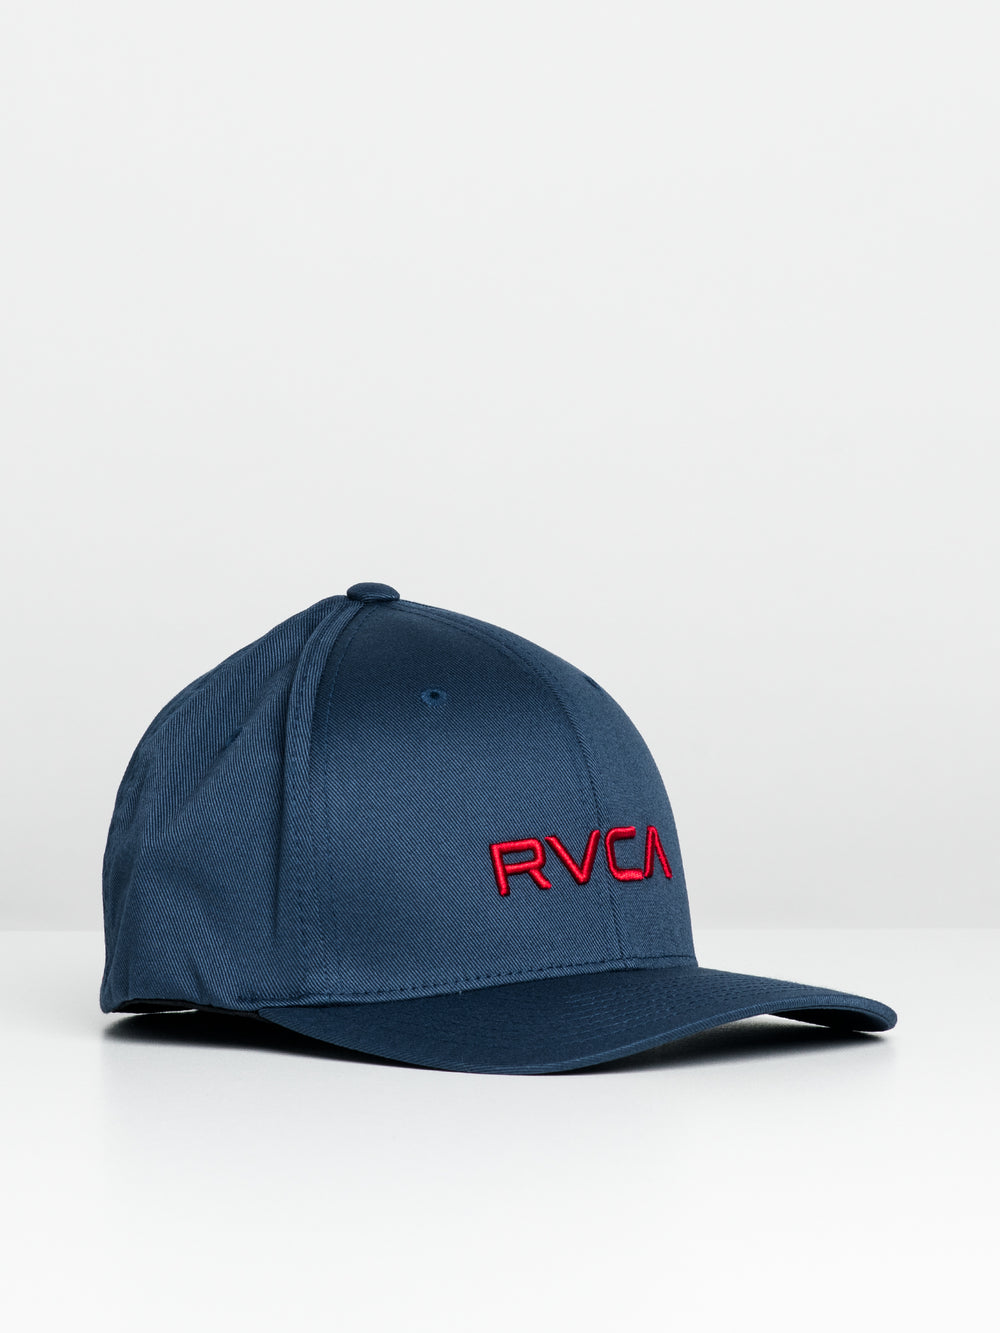 RVCA FLEXFIT HAT - DARK NAVY - CLEARANCE